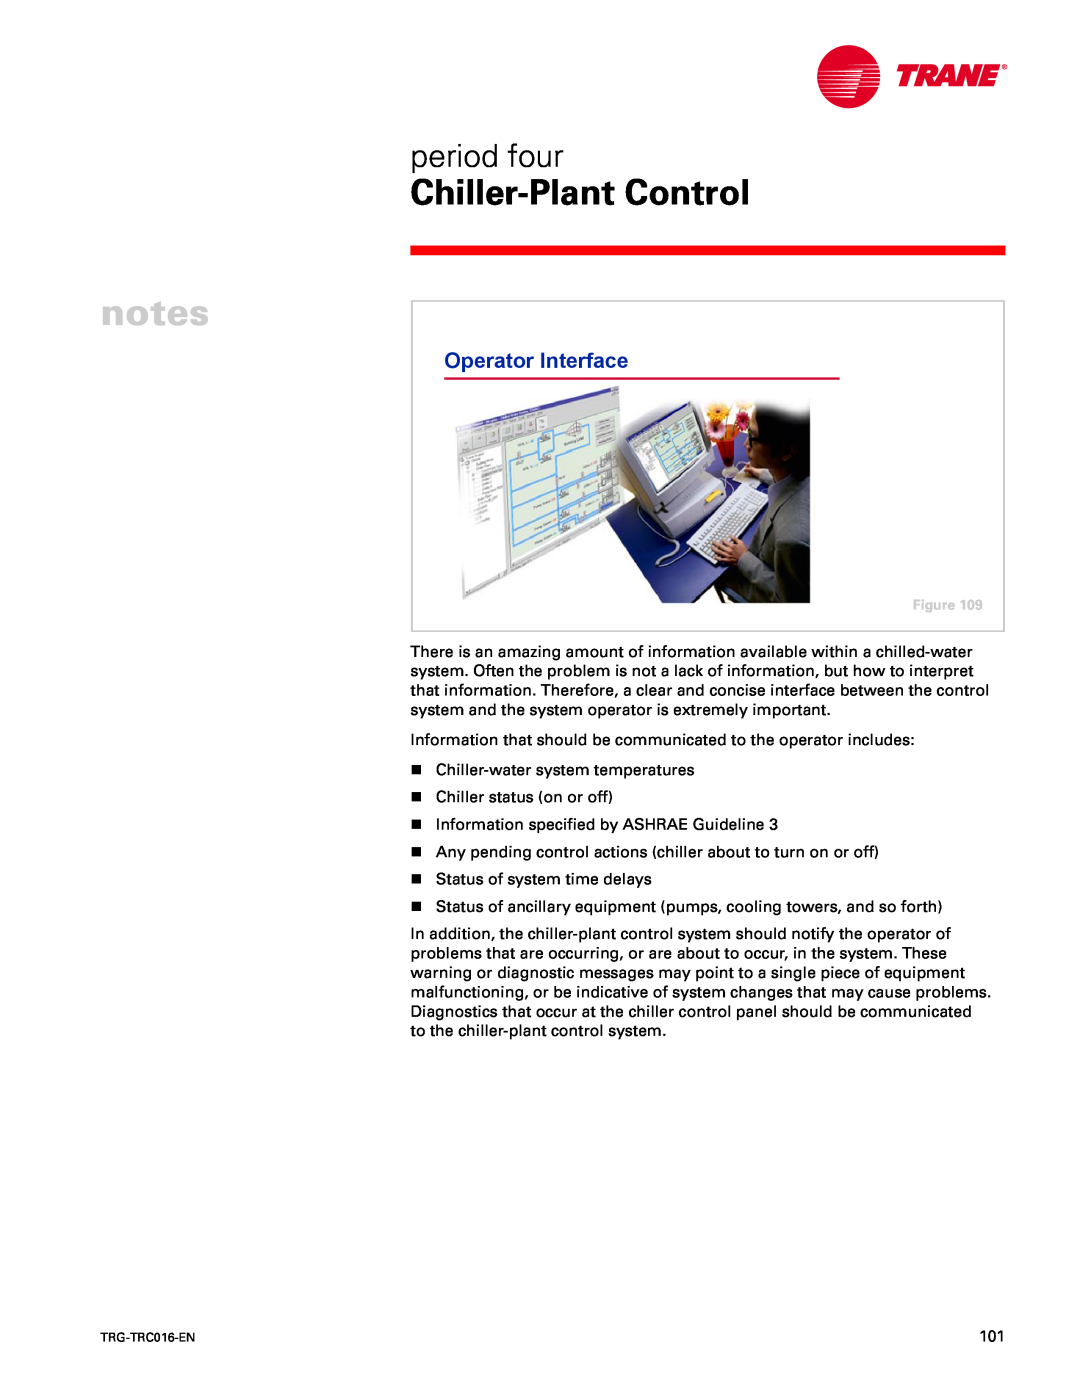 Trane TRG-TRC016-EN manual Operator Interface, notes, Chiller-PlantControl, period four 